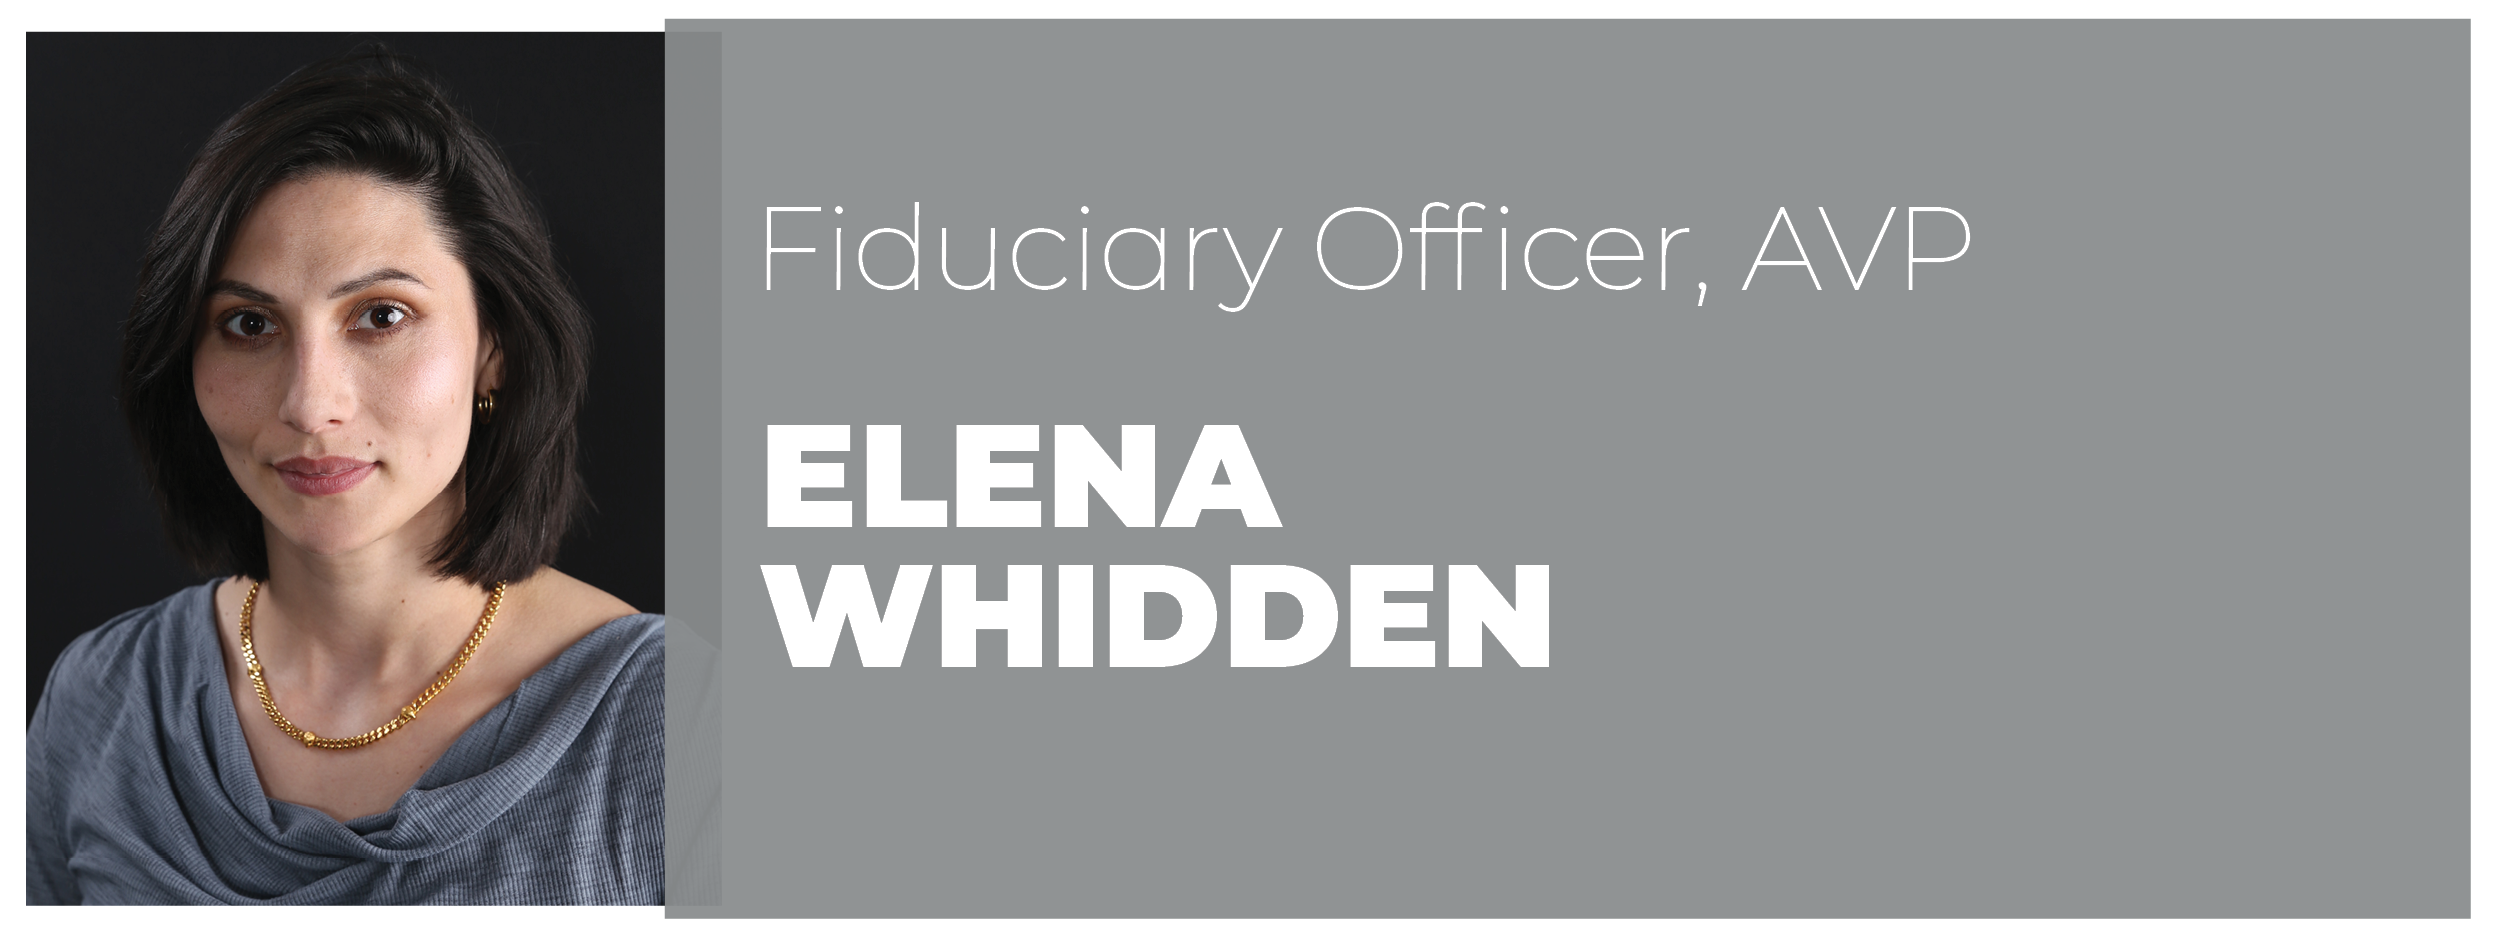 Elena Whidden, Fiduciary Officer, AVP